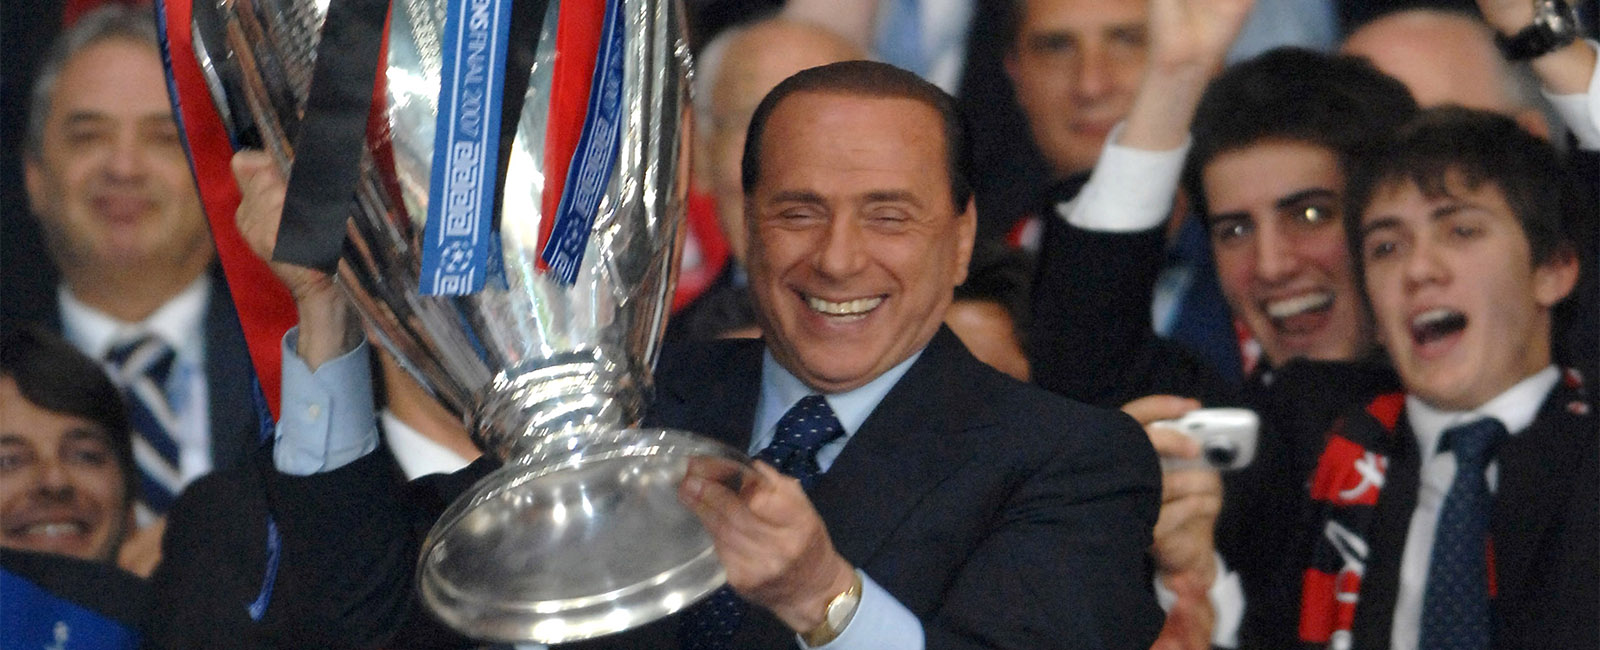 Il Milan di Berlusconi